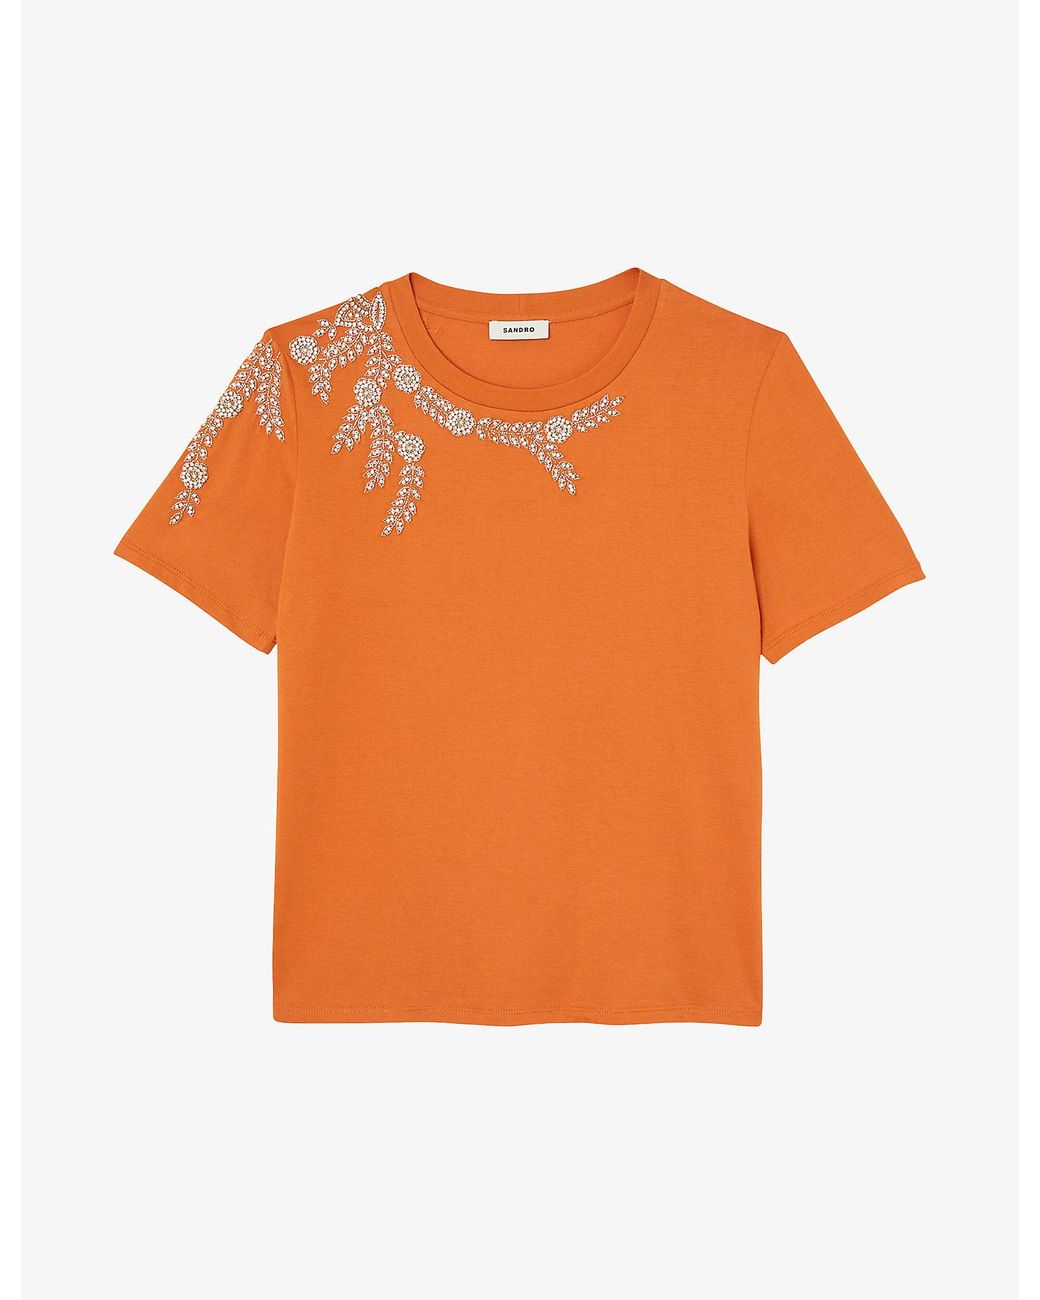 Sandro Rhinestone-embellished Cotton T-shirt in Orange | Lyst